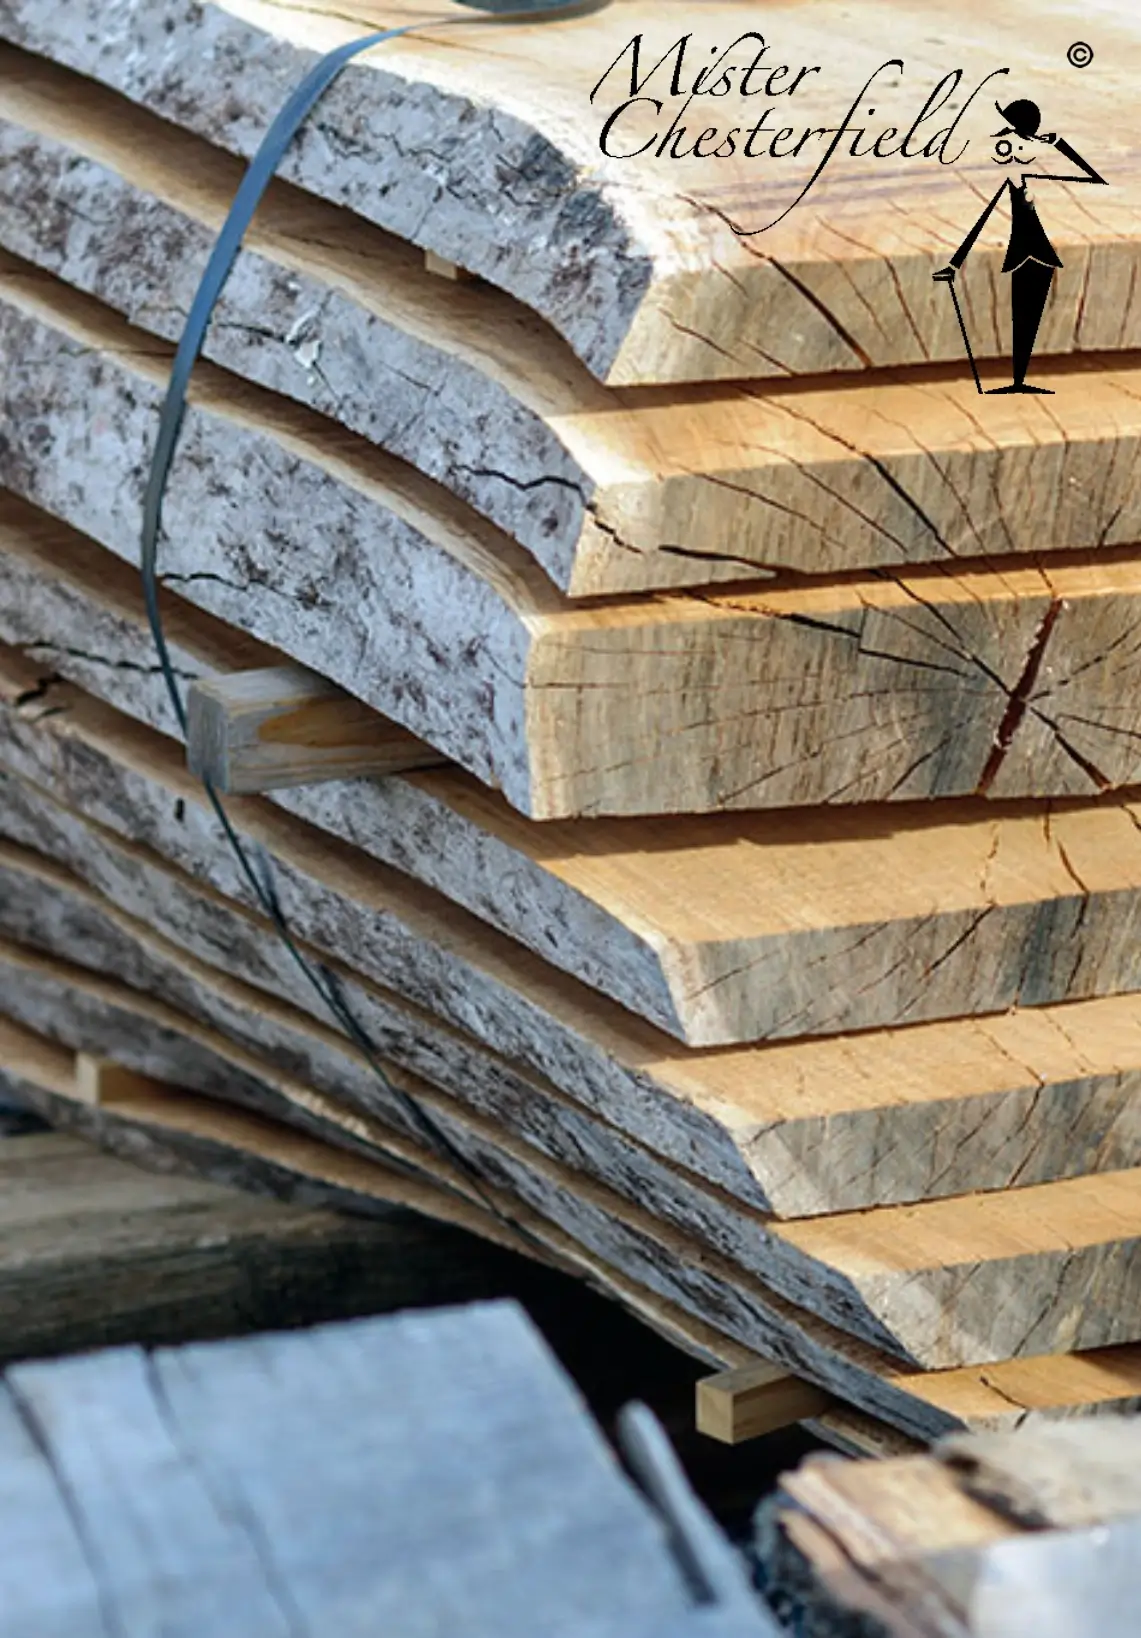 Chesterfield materialen hout ruw ongezaagde planken